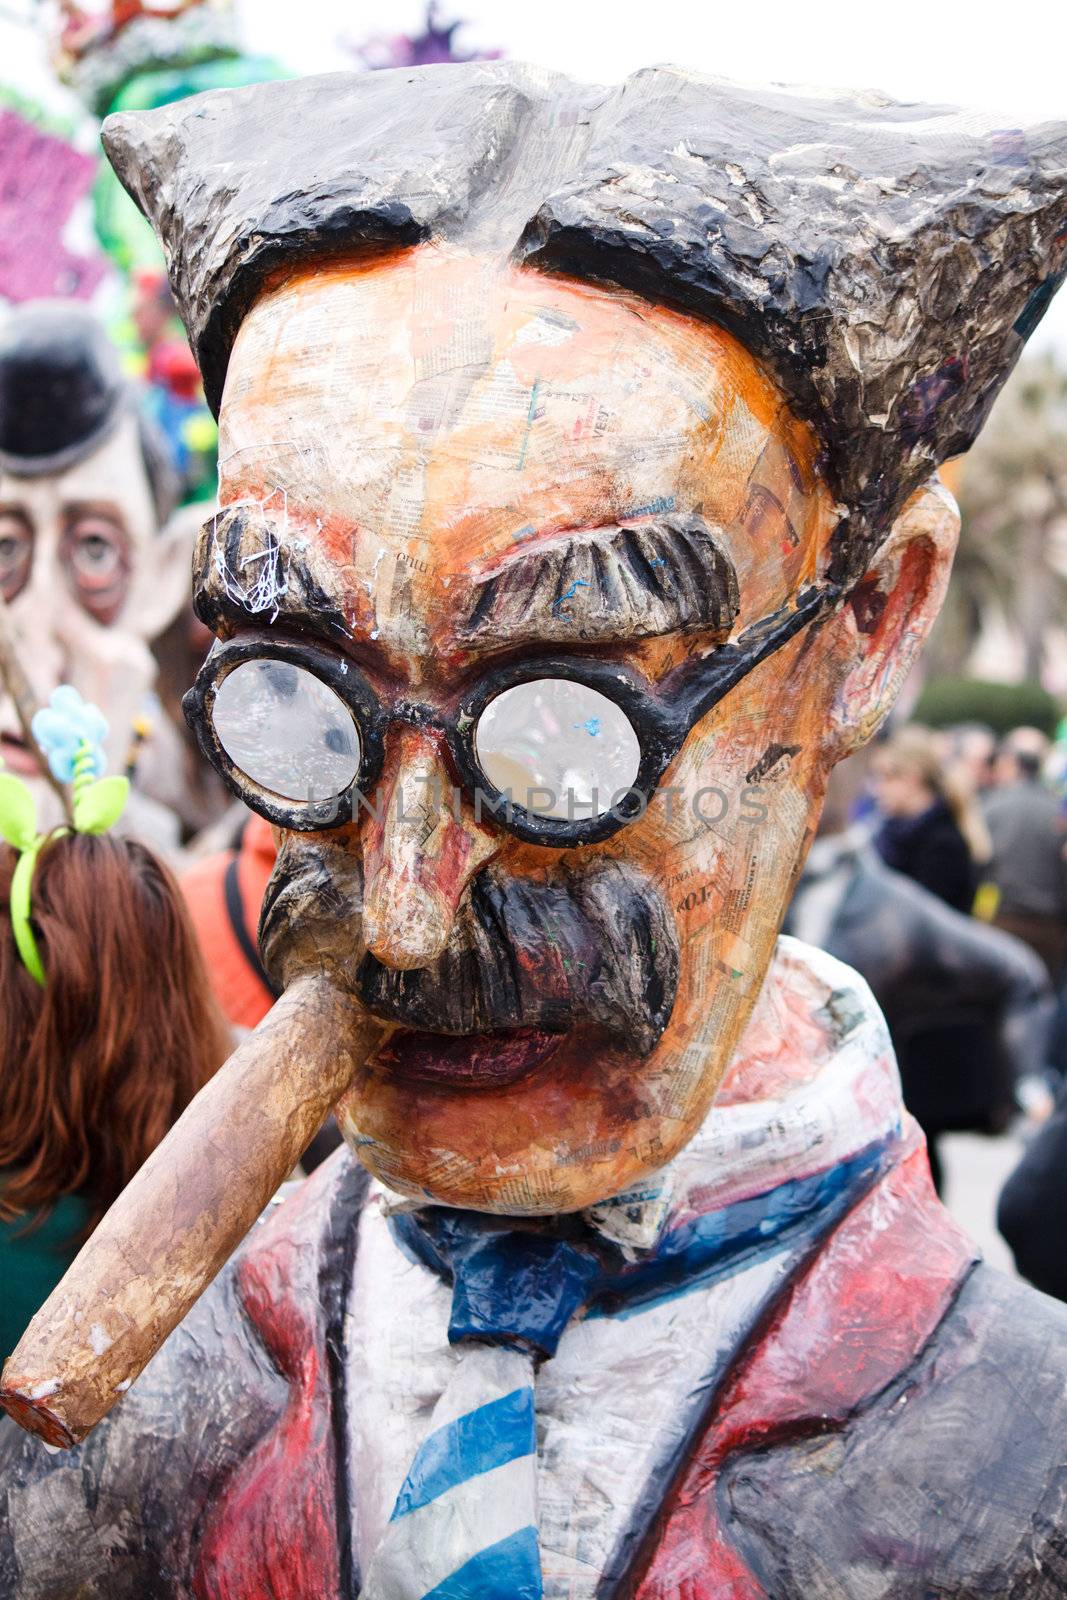 Carival of Viareggio. Masquerading cardboard depicting Groucho 